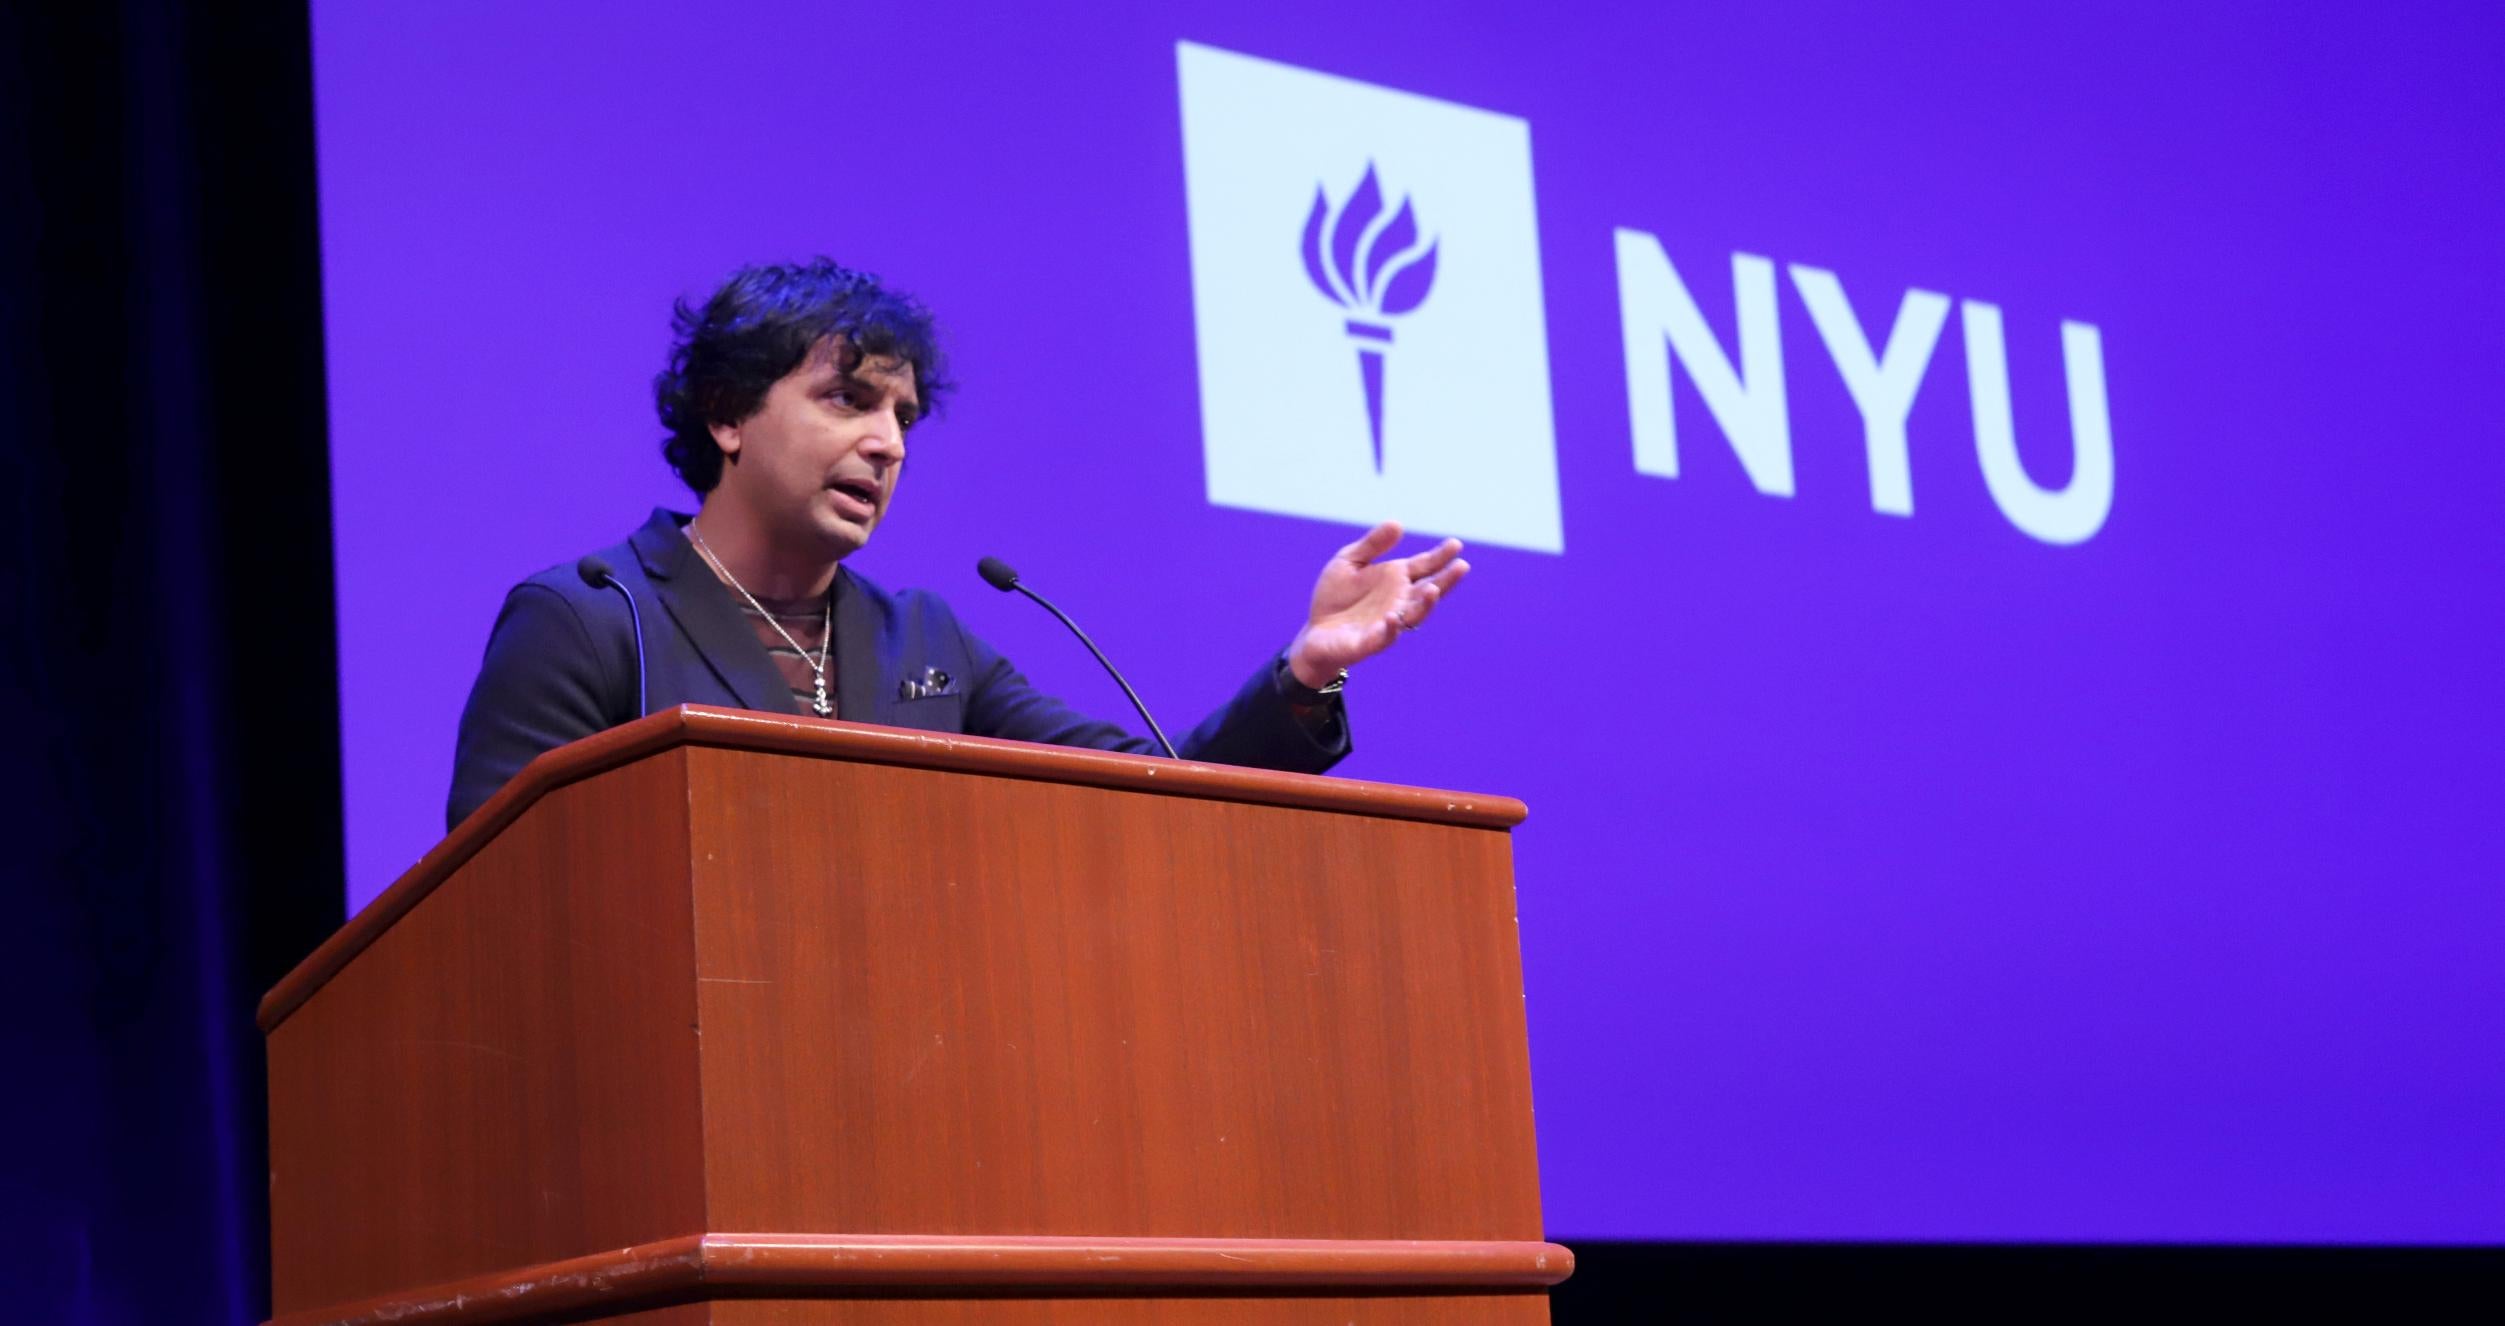 Filmmaker M. Night Shyamalan speaking at a podium in front of NYU logo background